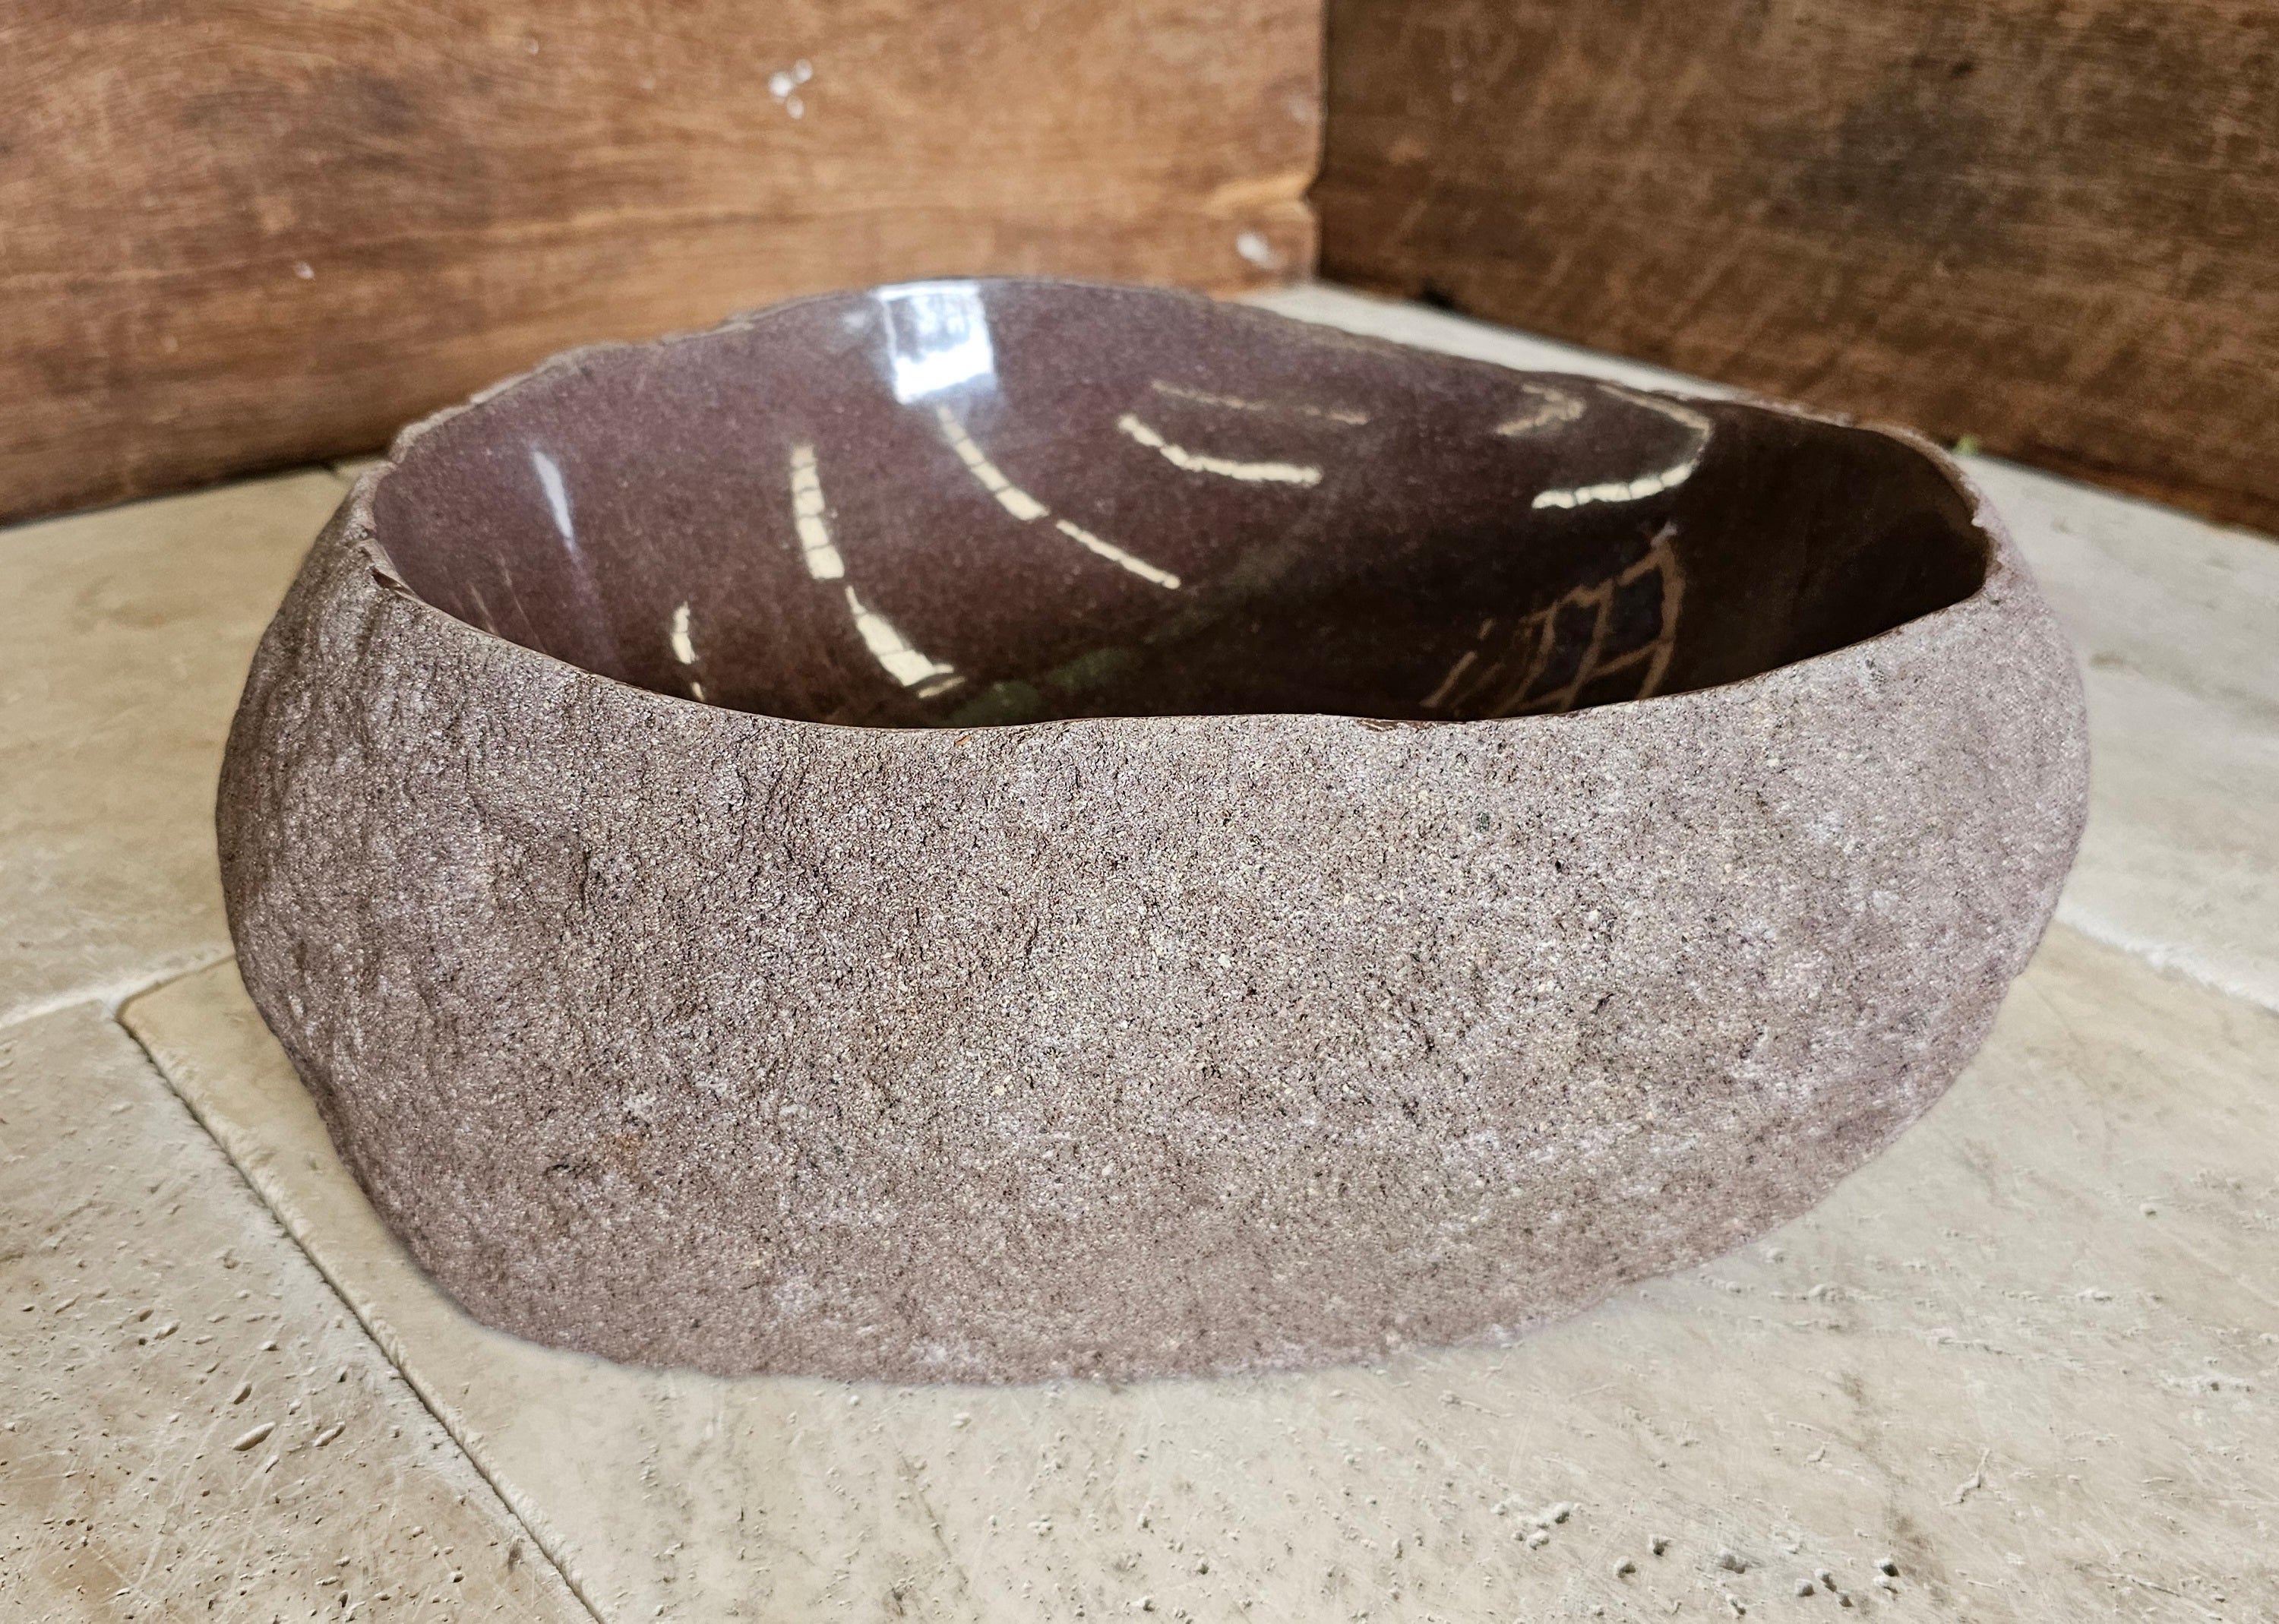 Handmade Natural Oval River Stone Bathroom Basin - RVS2306008